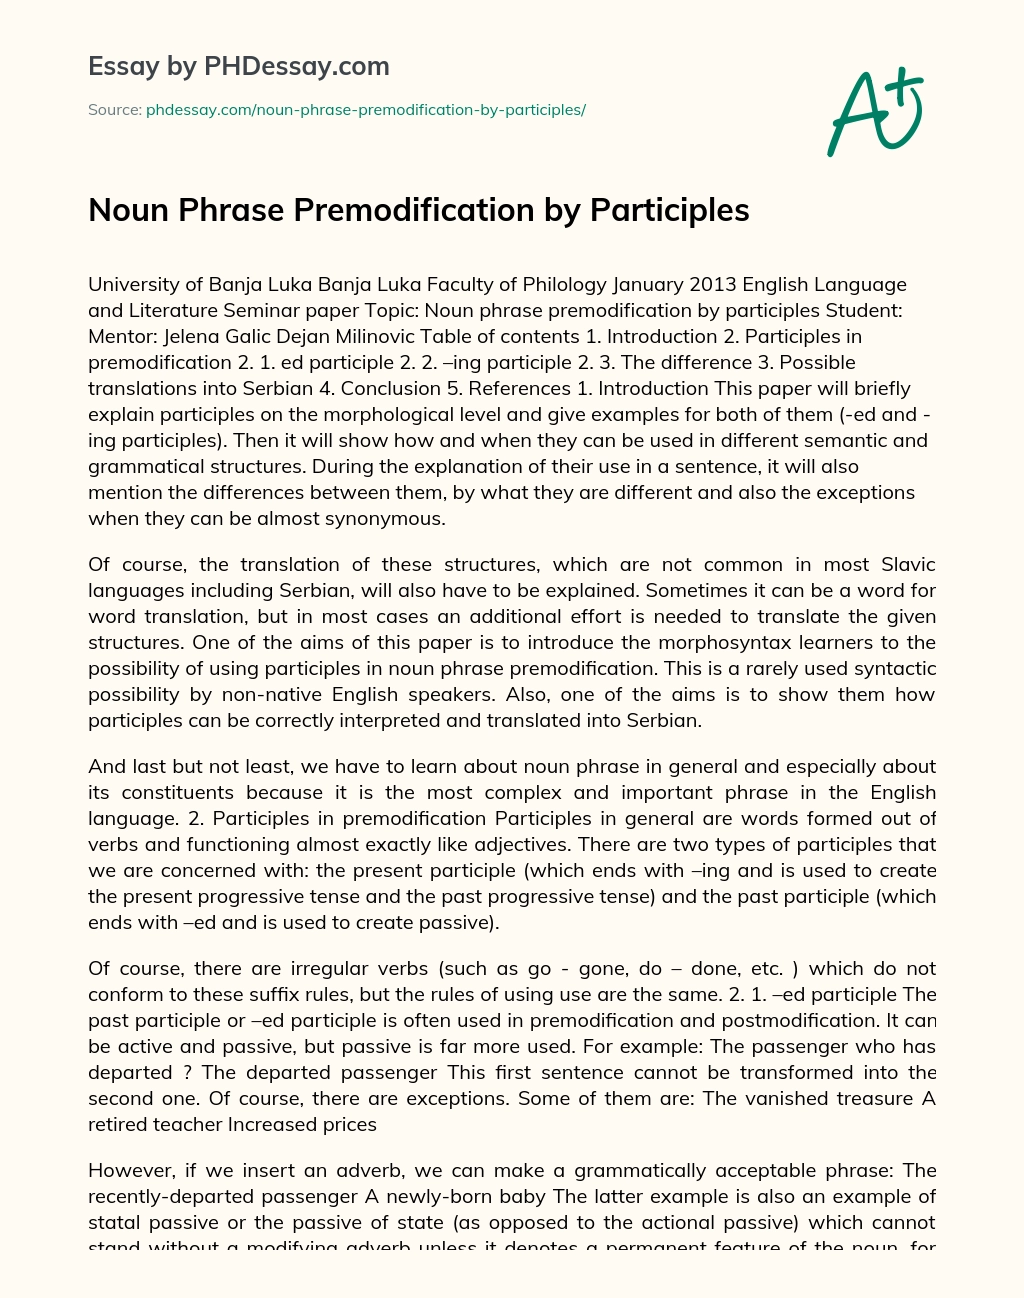 Noun Phrase Premodification by Participles essay